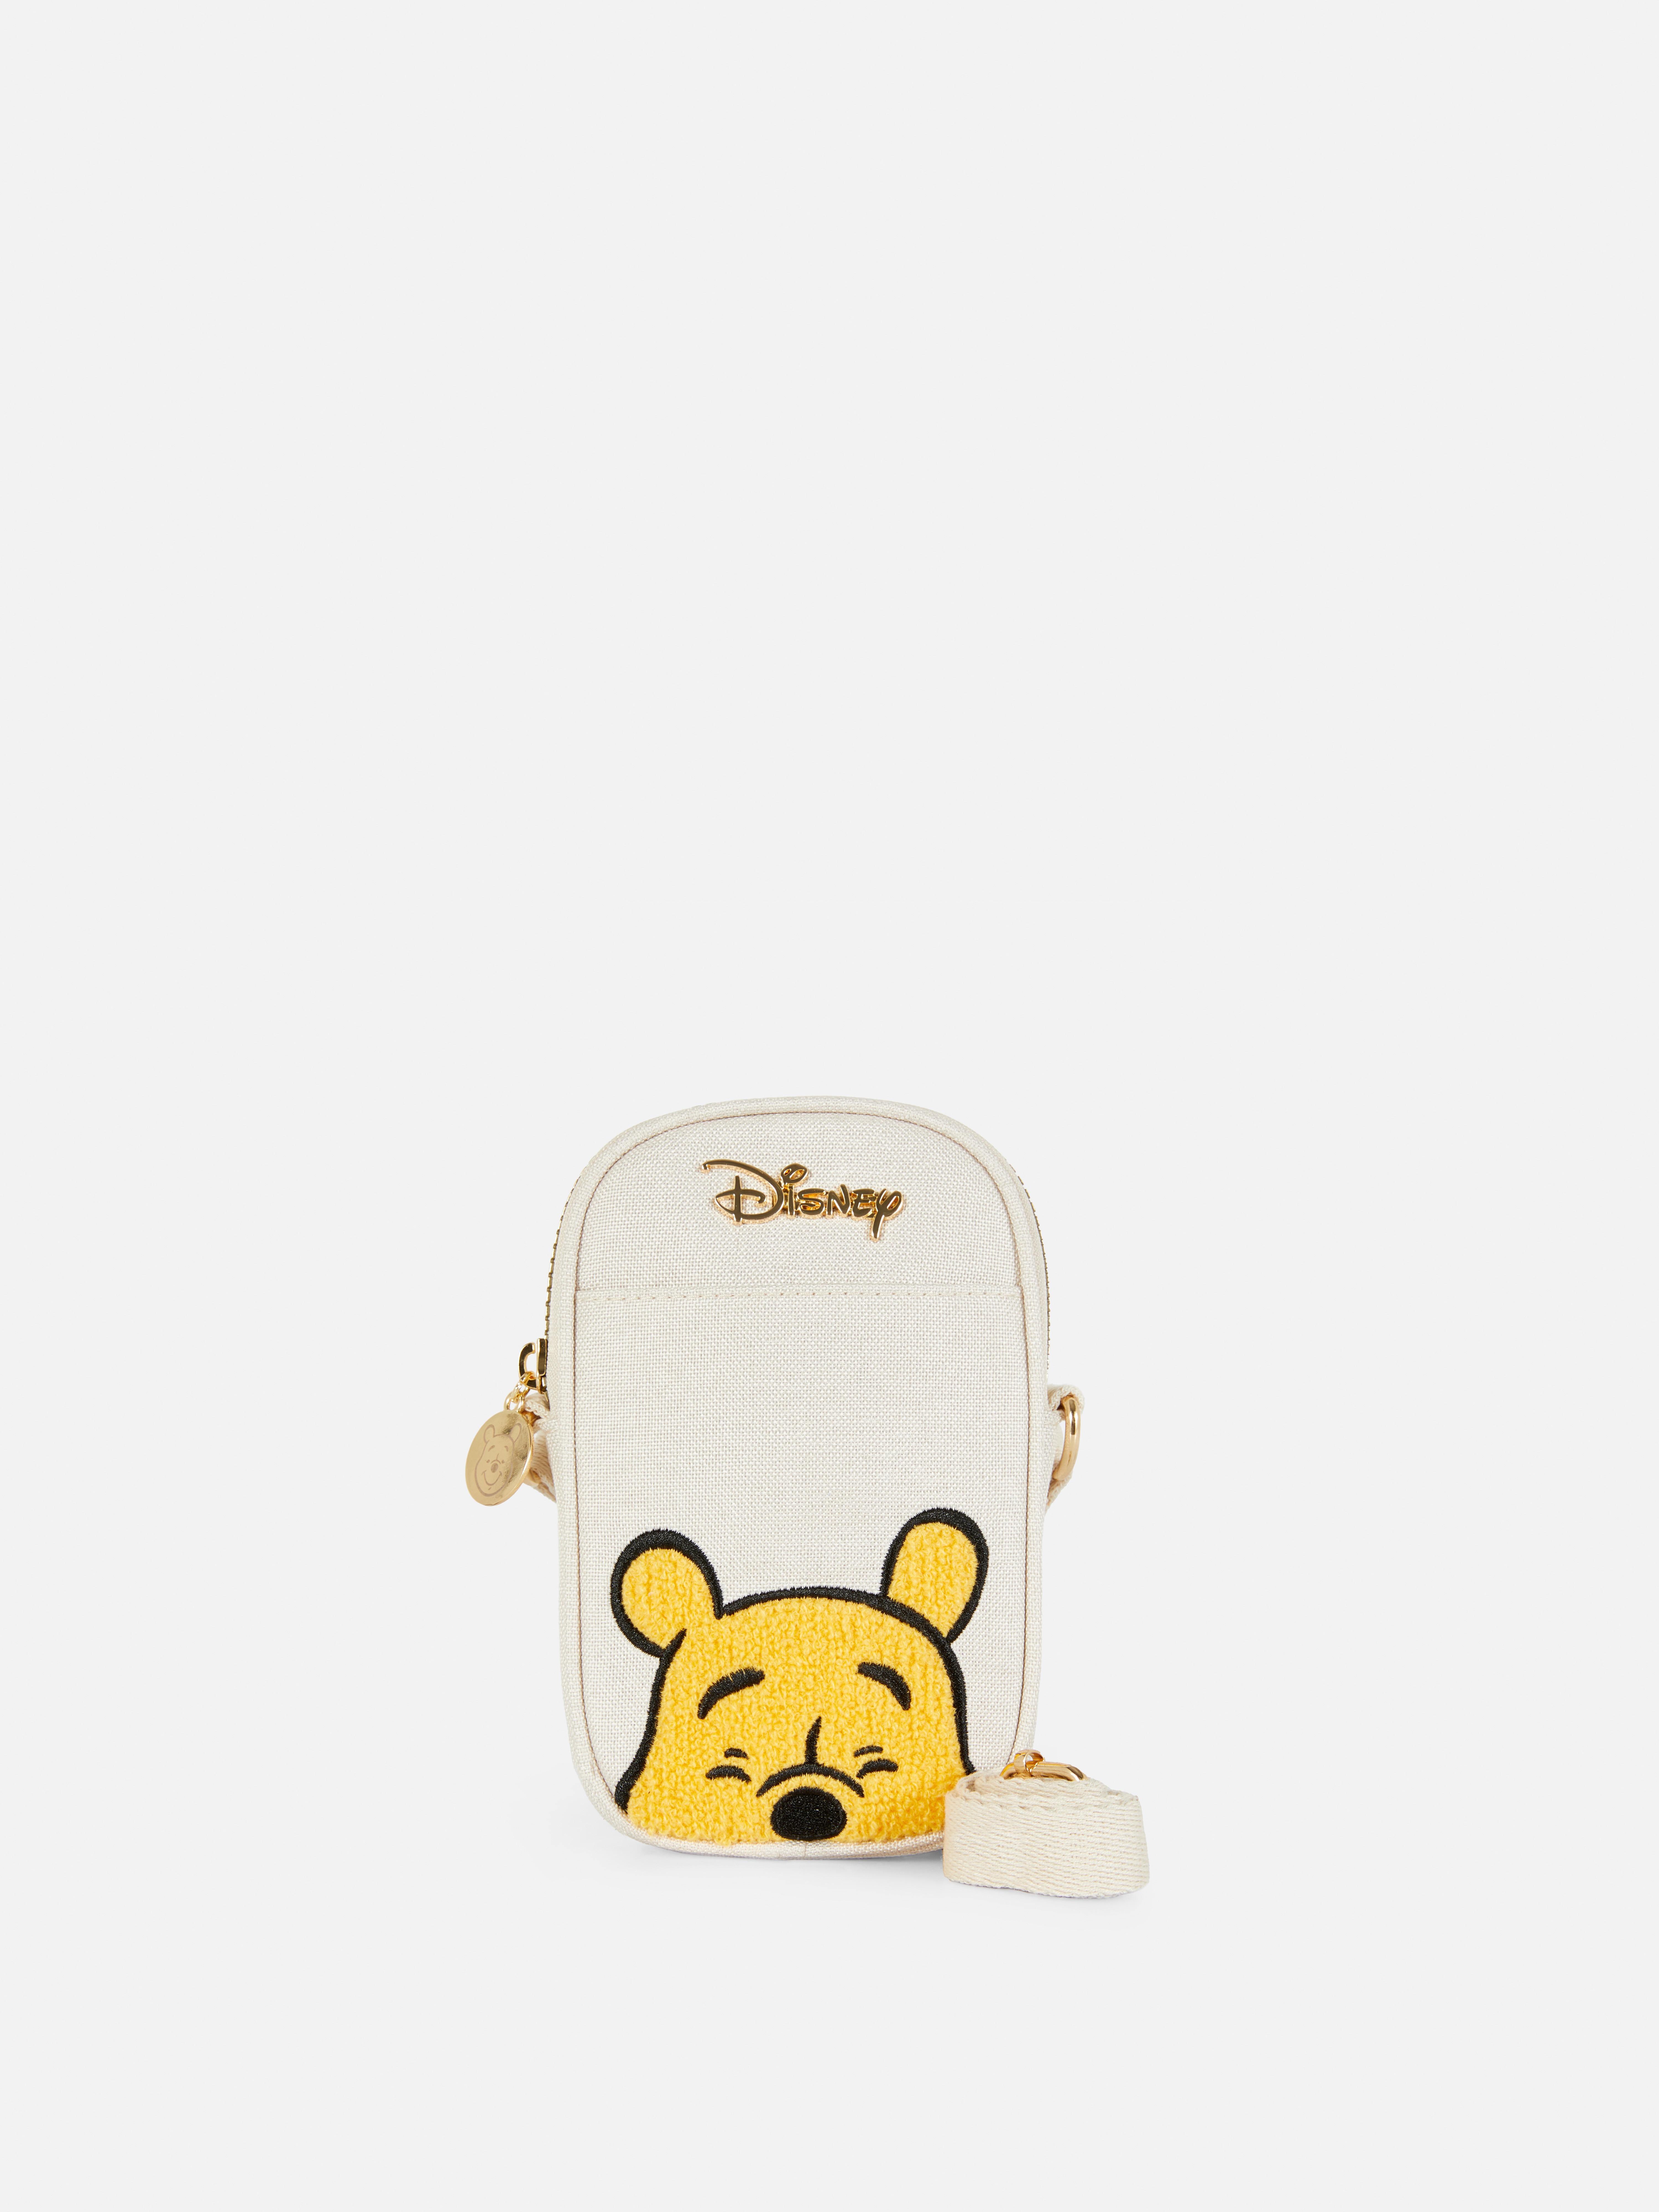 Disney's Winnie the Pooh Phone Holder Bag